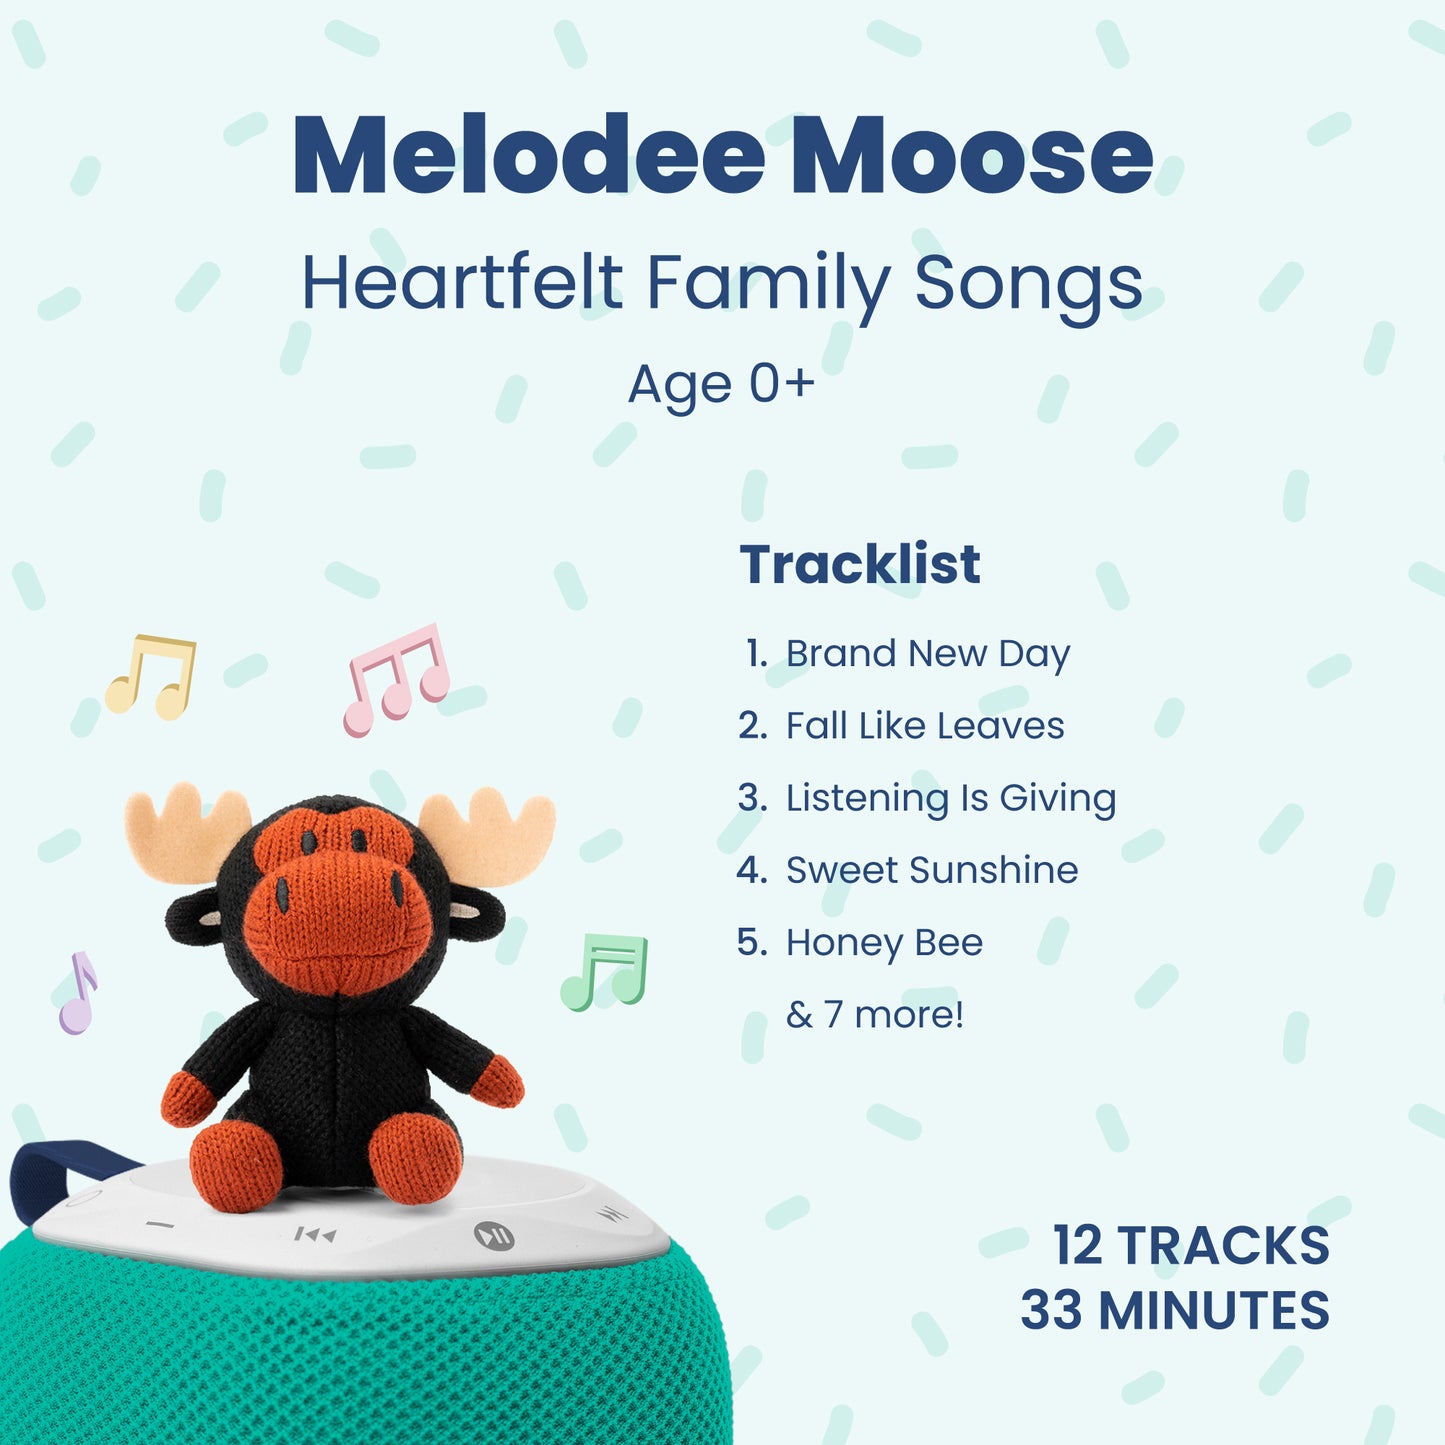 Melodee Moose